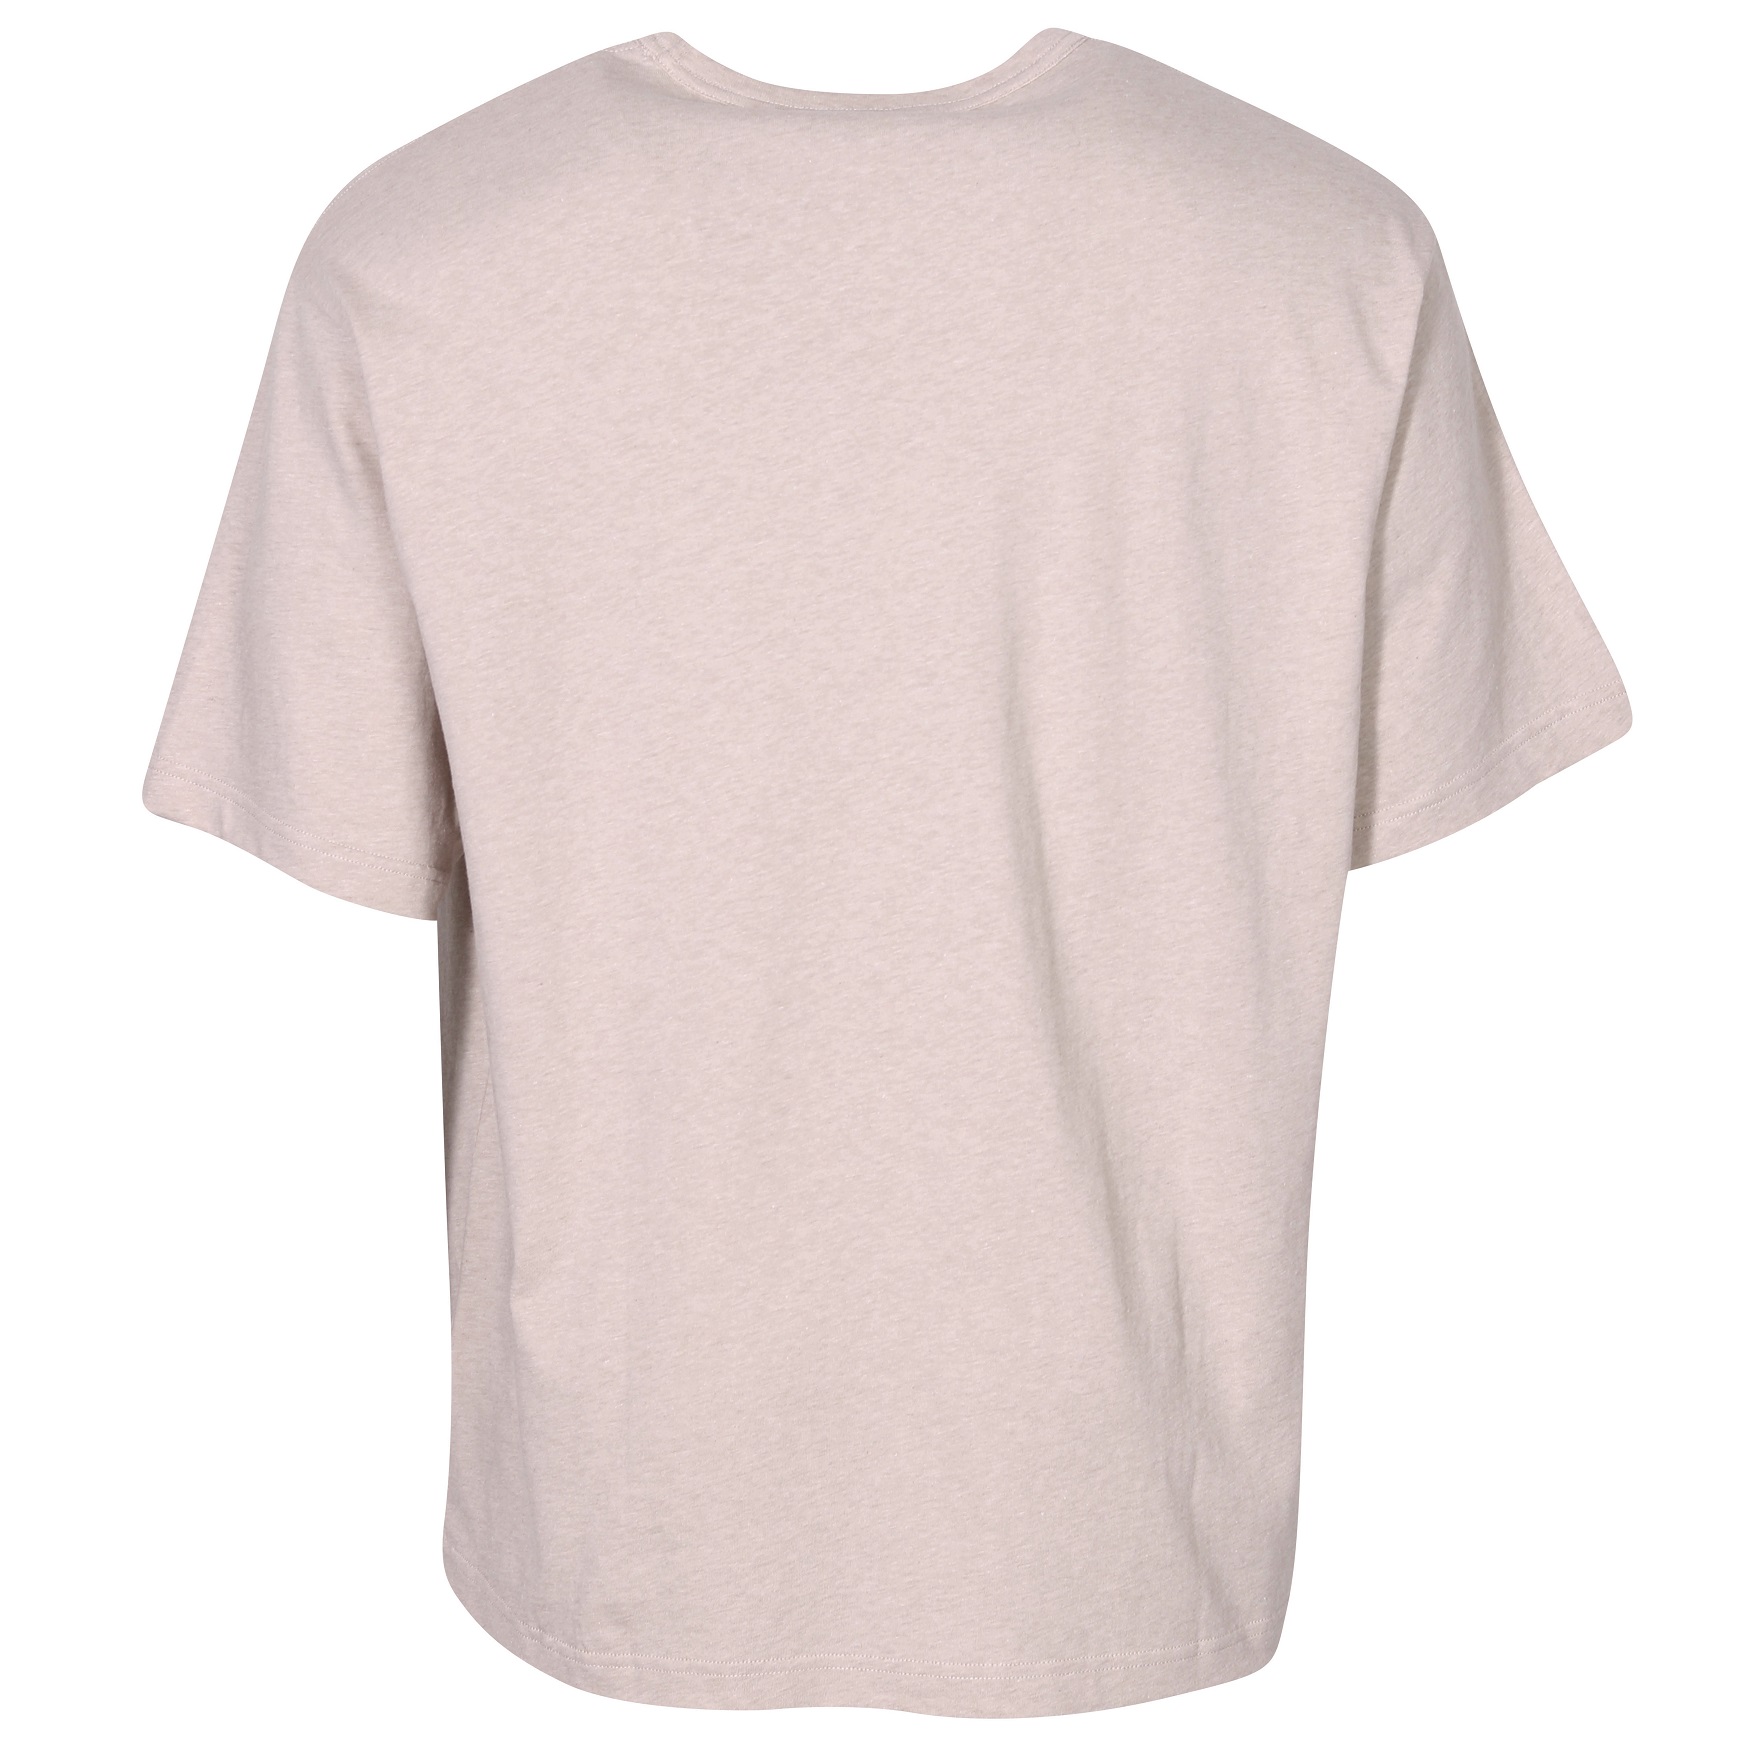 ACNE STUDIOS Unisex Oversize Face T-Shirt in Oatmeal Melange M